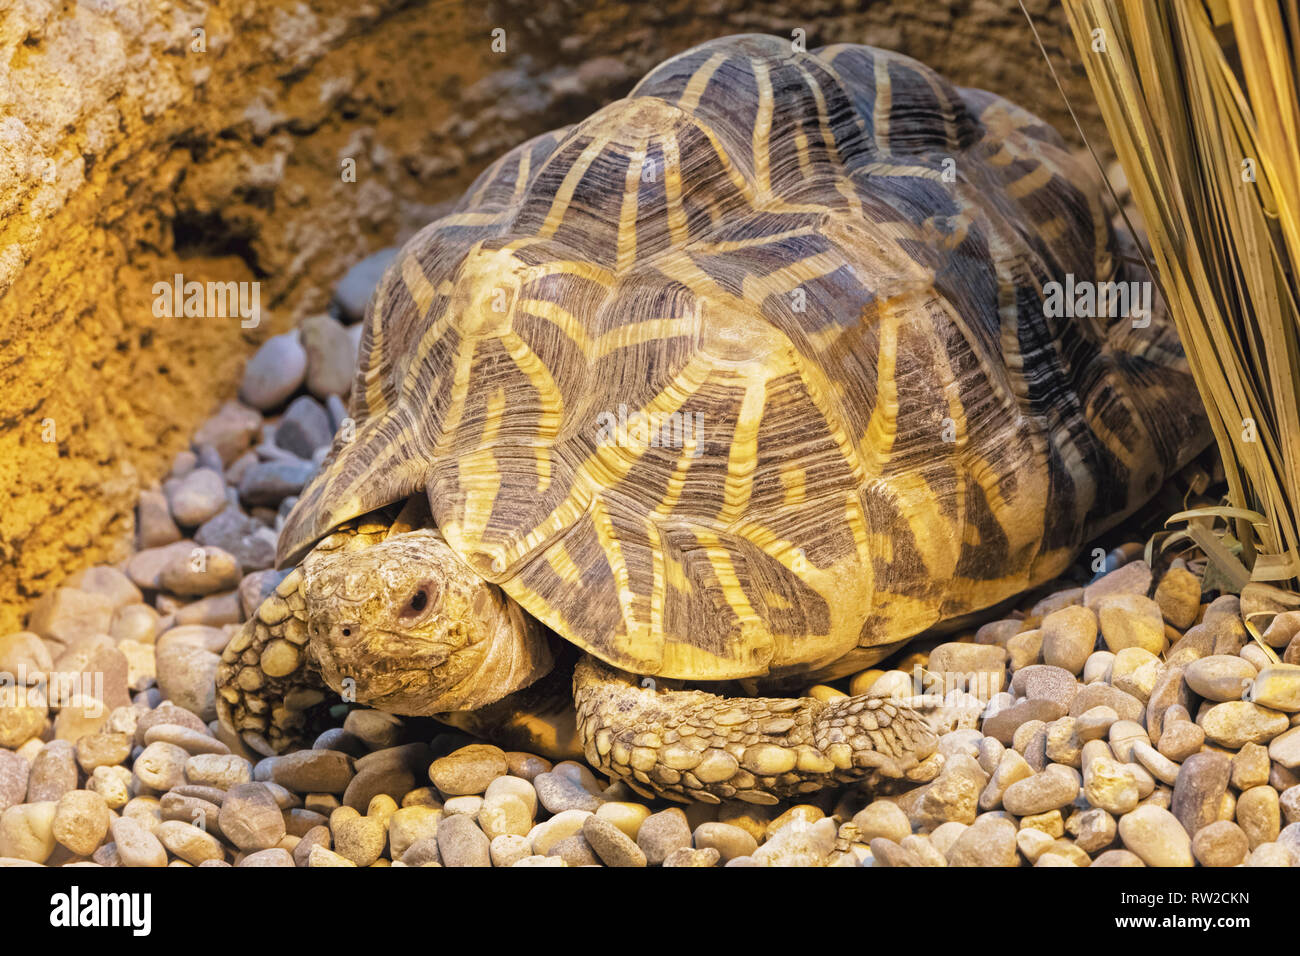 Star indiane tartaruga, Geochelone elegans è una tartaruga minacciate nativa per le aree asciutte e la foresta scrub in India e Sri Lanka. Foto Stock